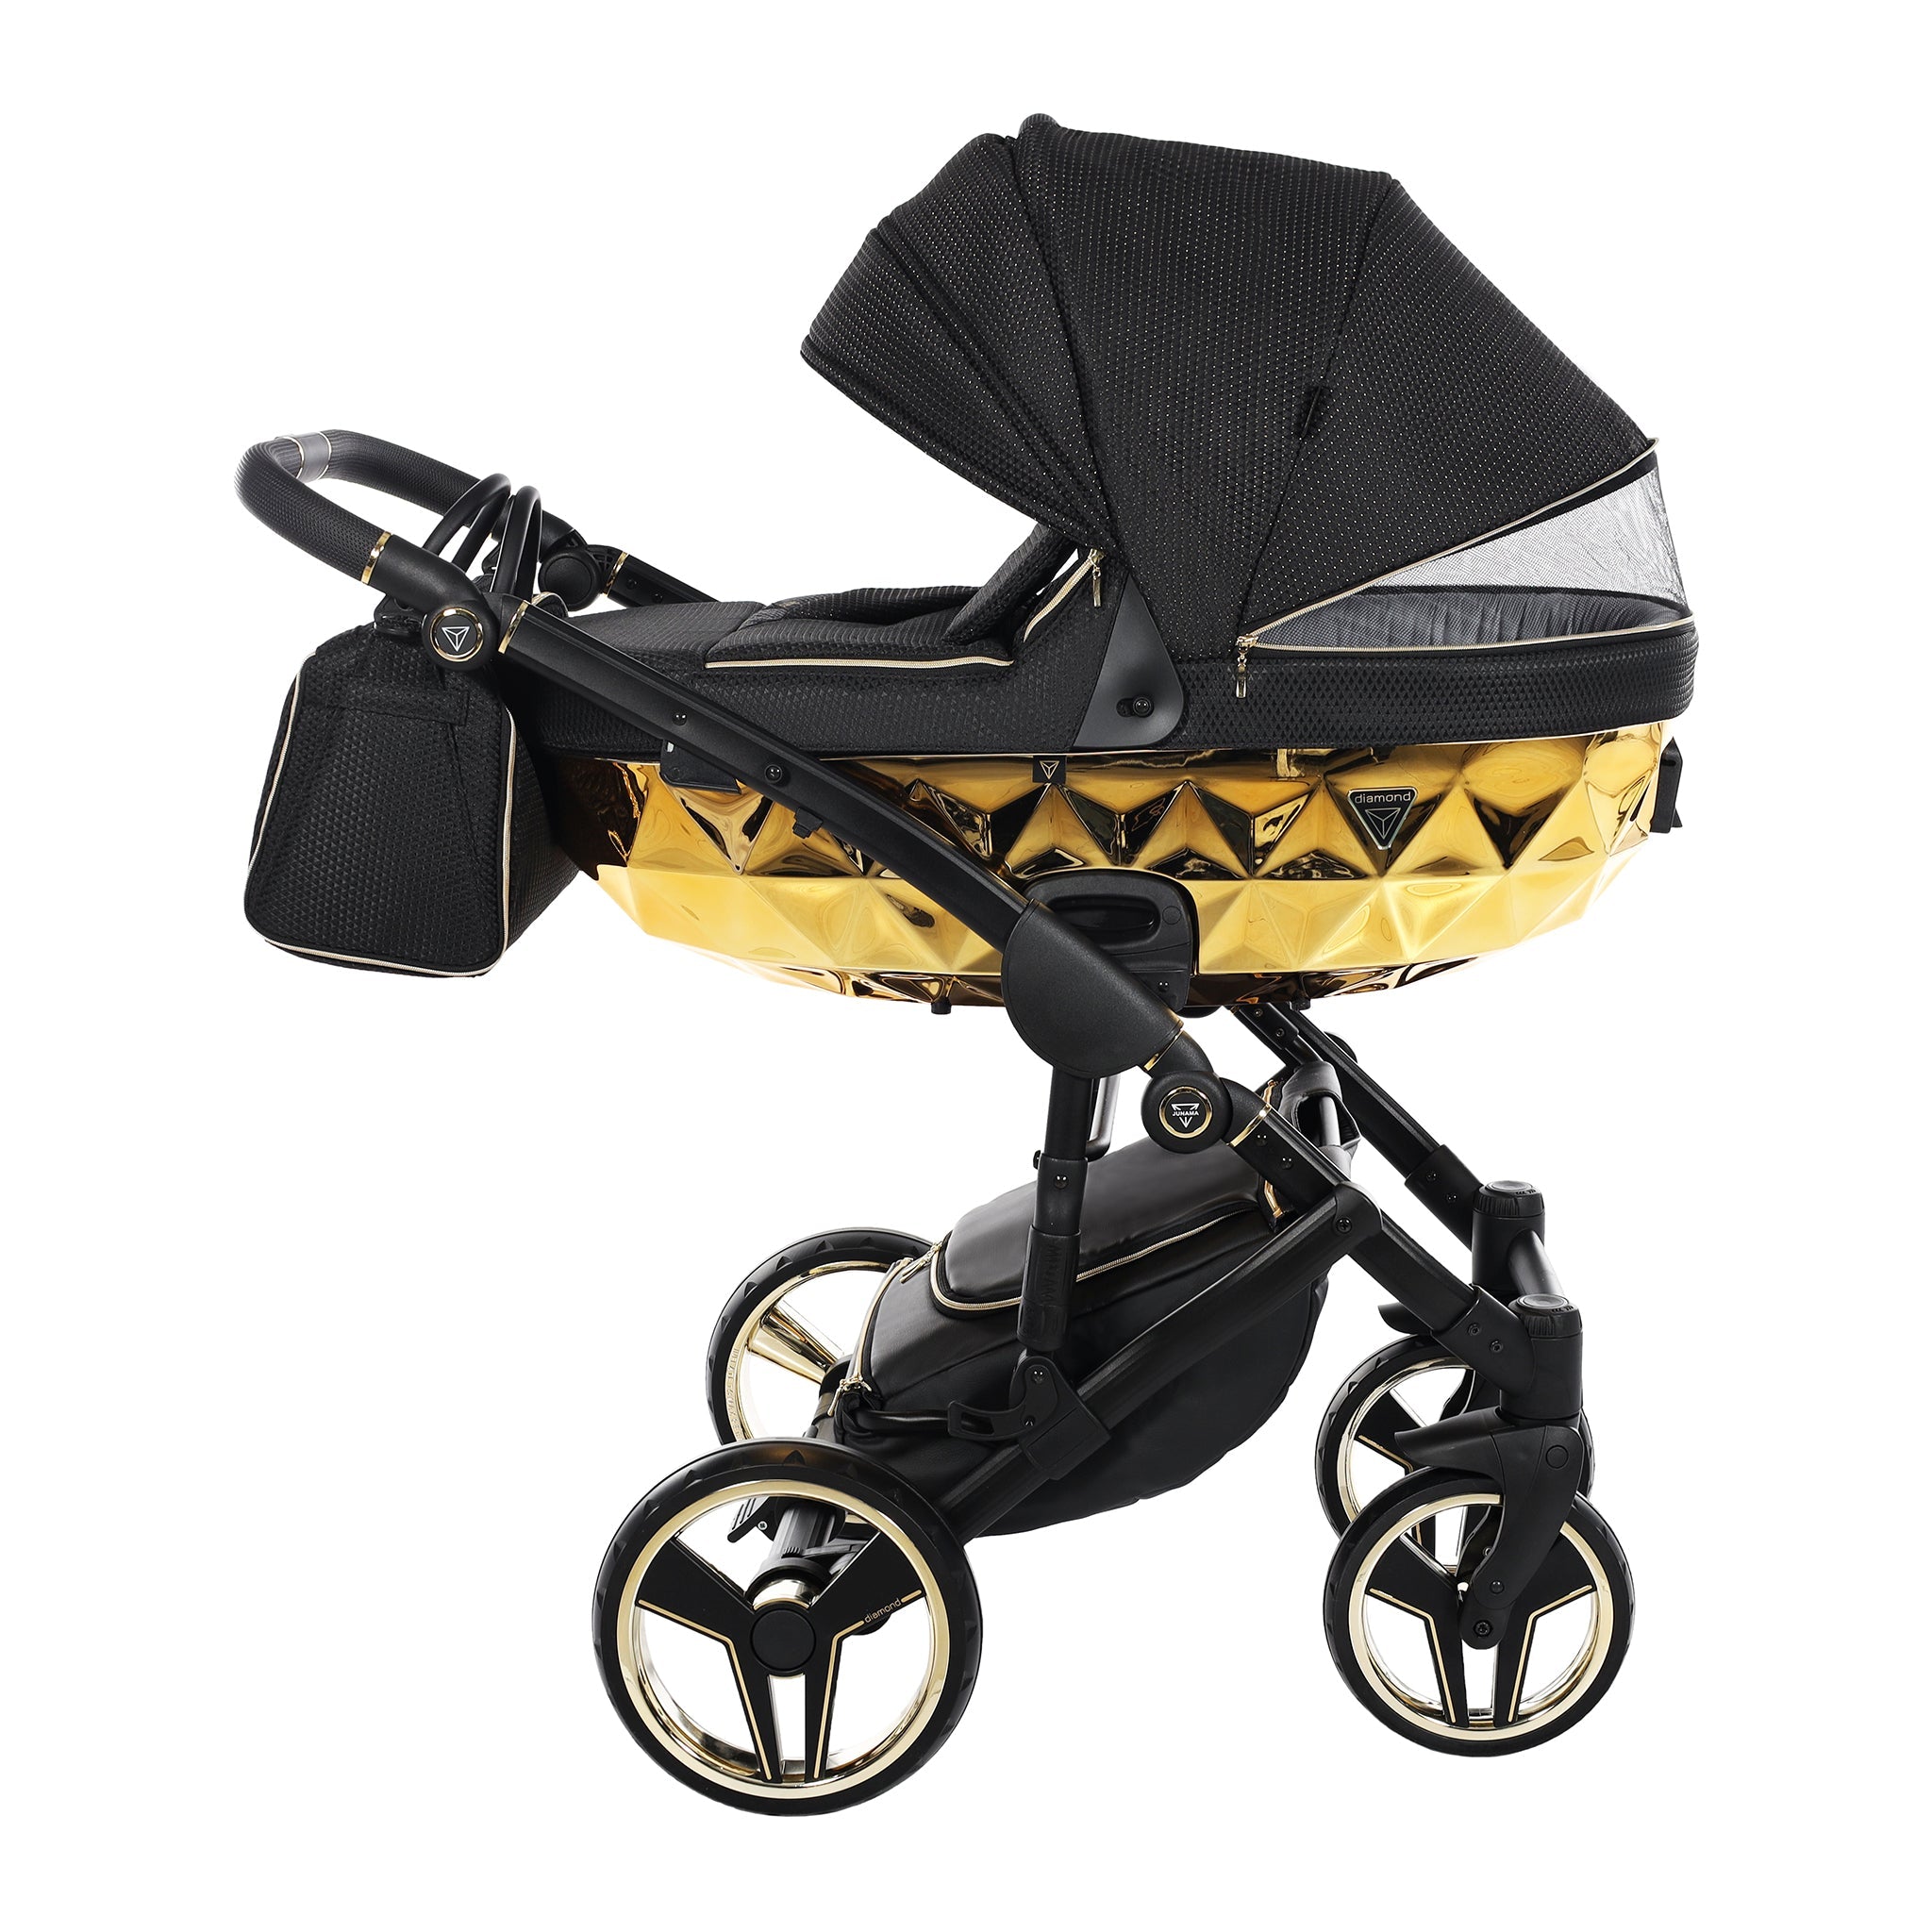 Junama Mirror, baby prams or stroller 2 in 1 - Gold chrome and Black, Code number: JUNMIR02